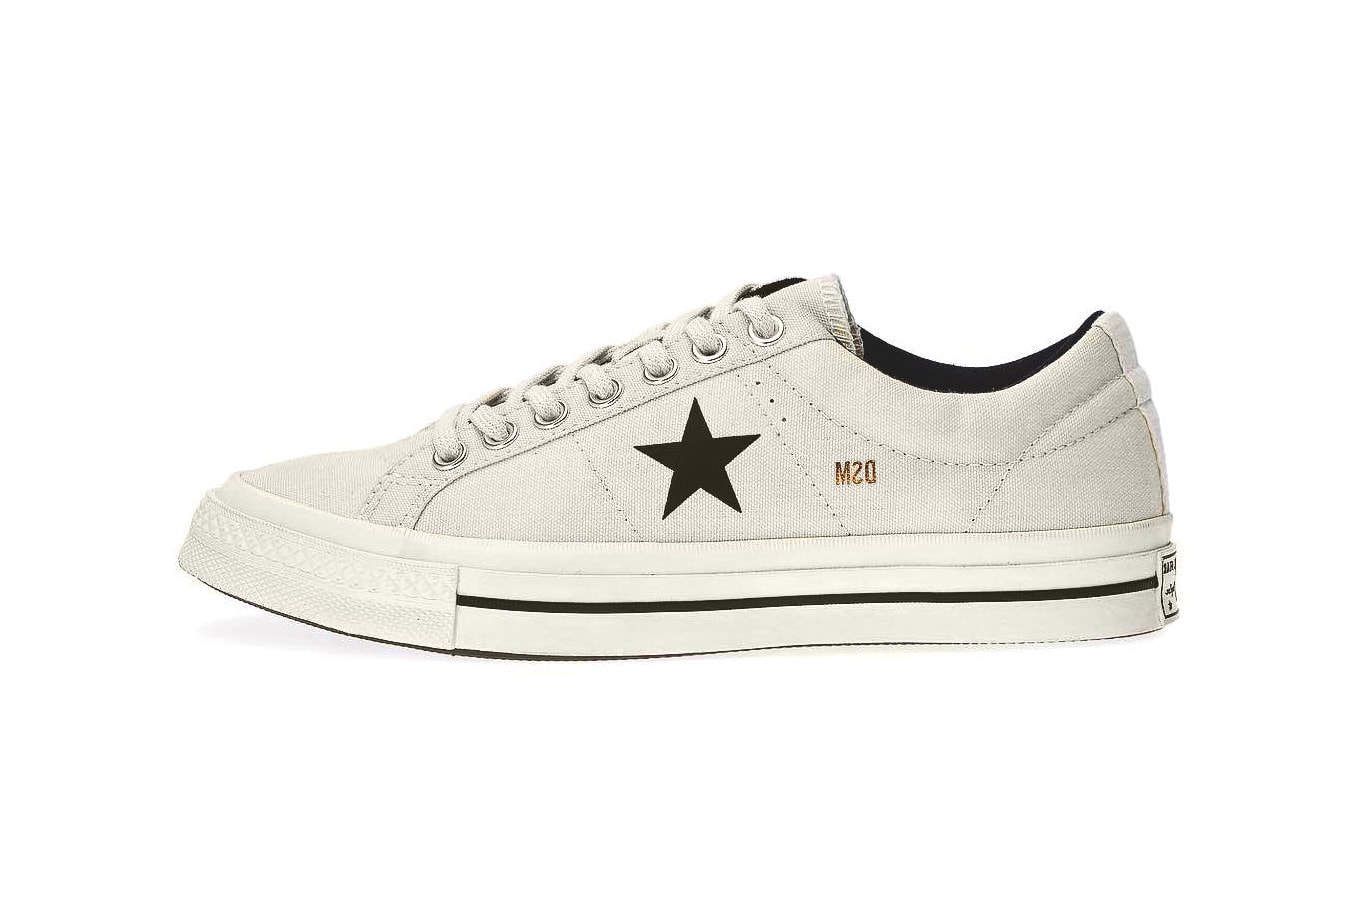 Dover Street Market x Converse One Star Release date sneaker info DSM singapore online purchase